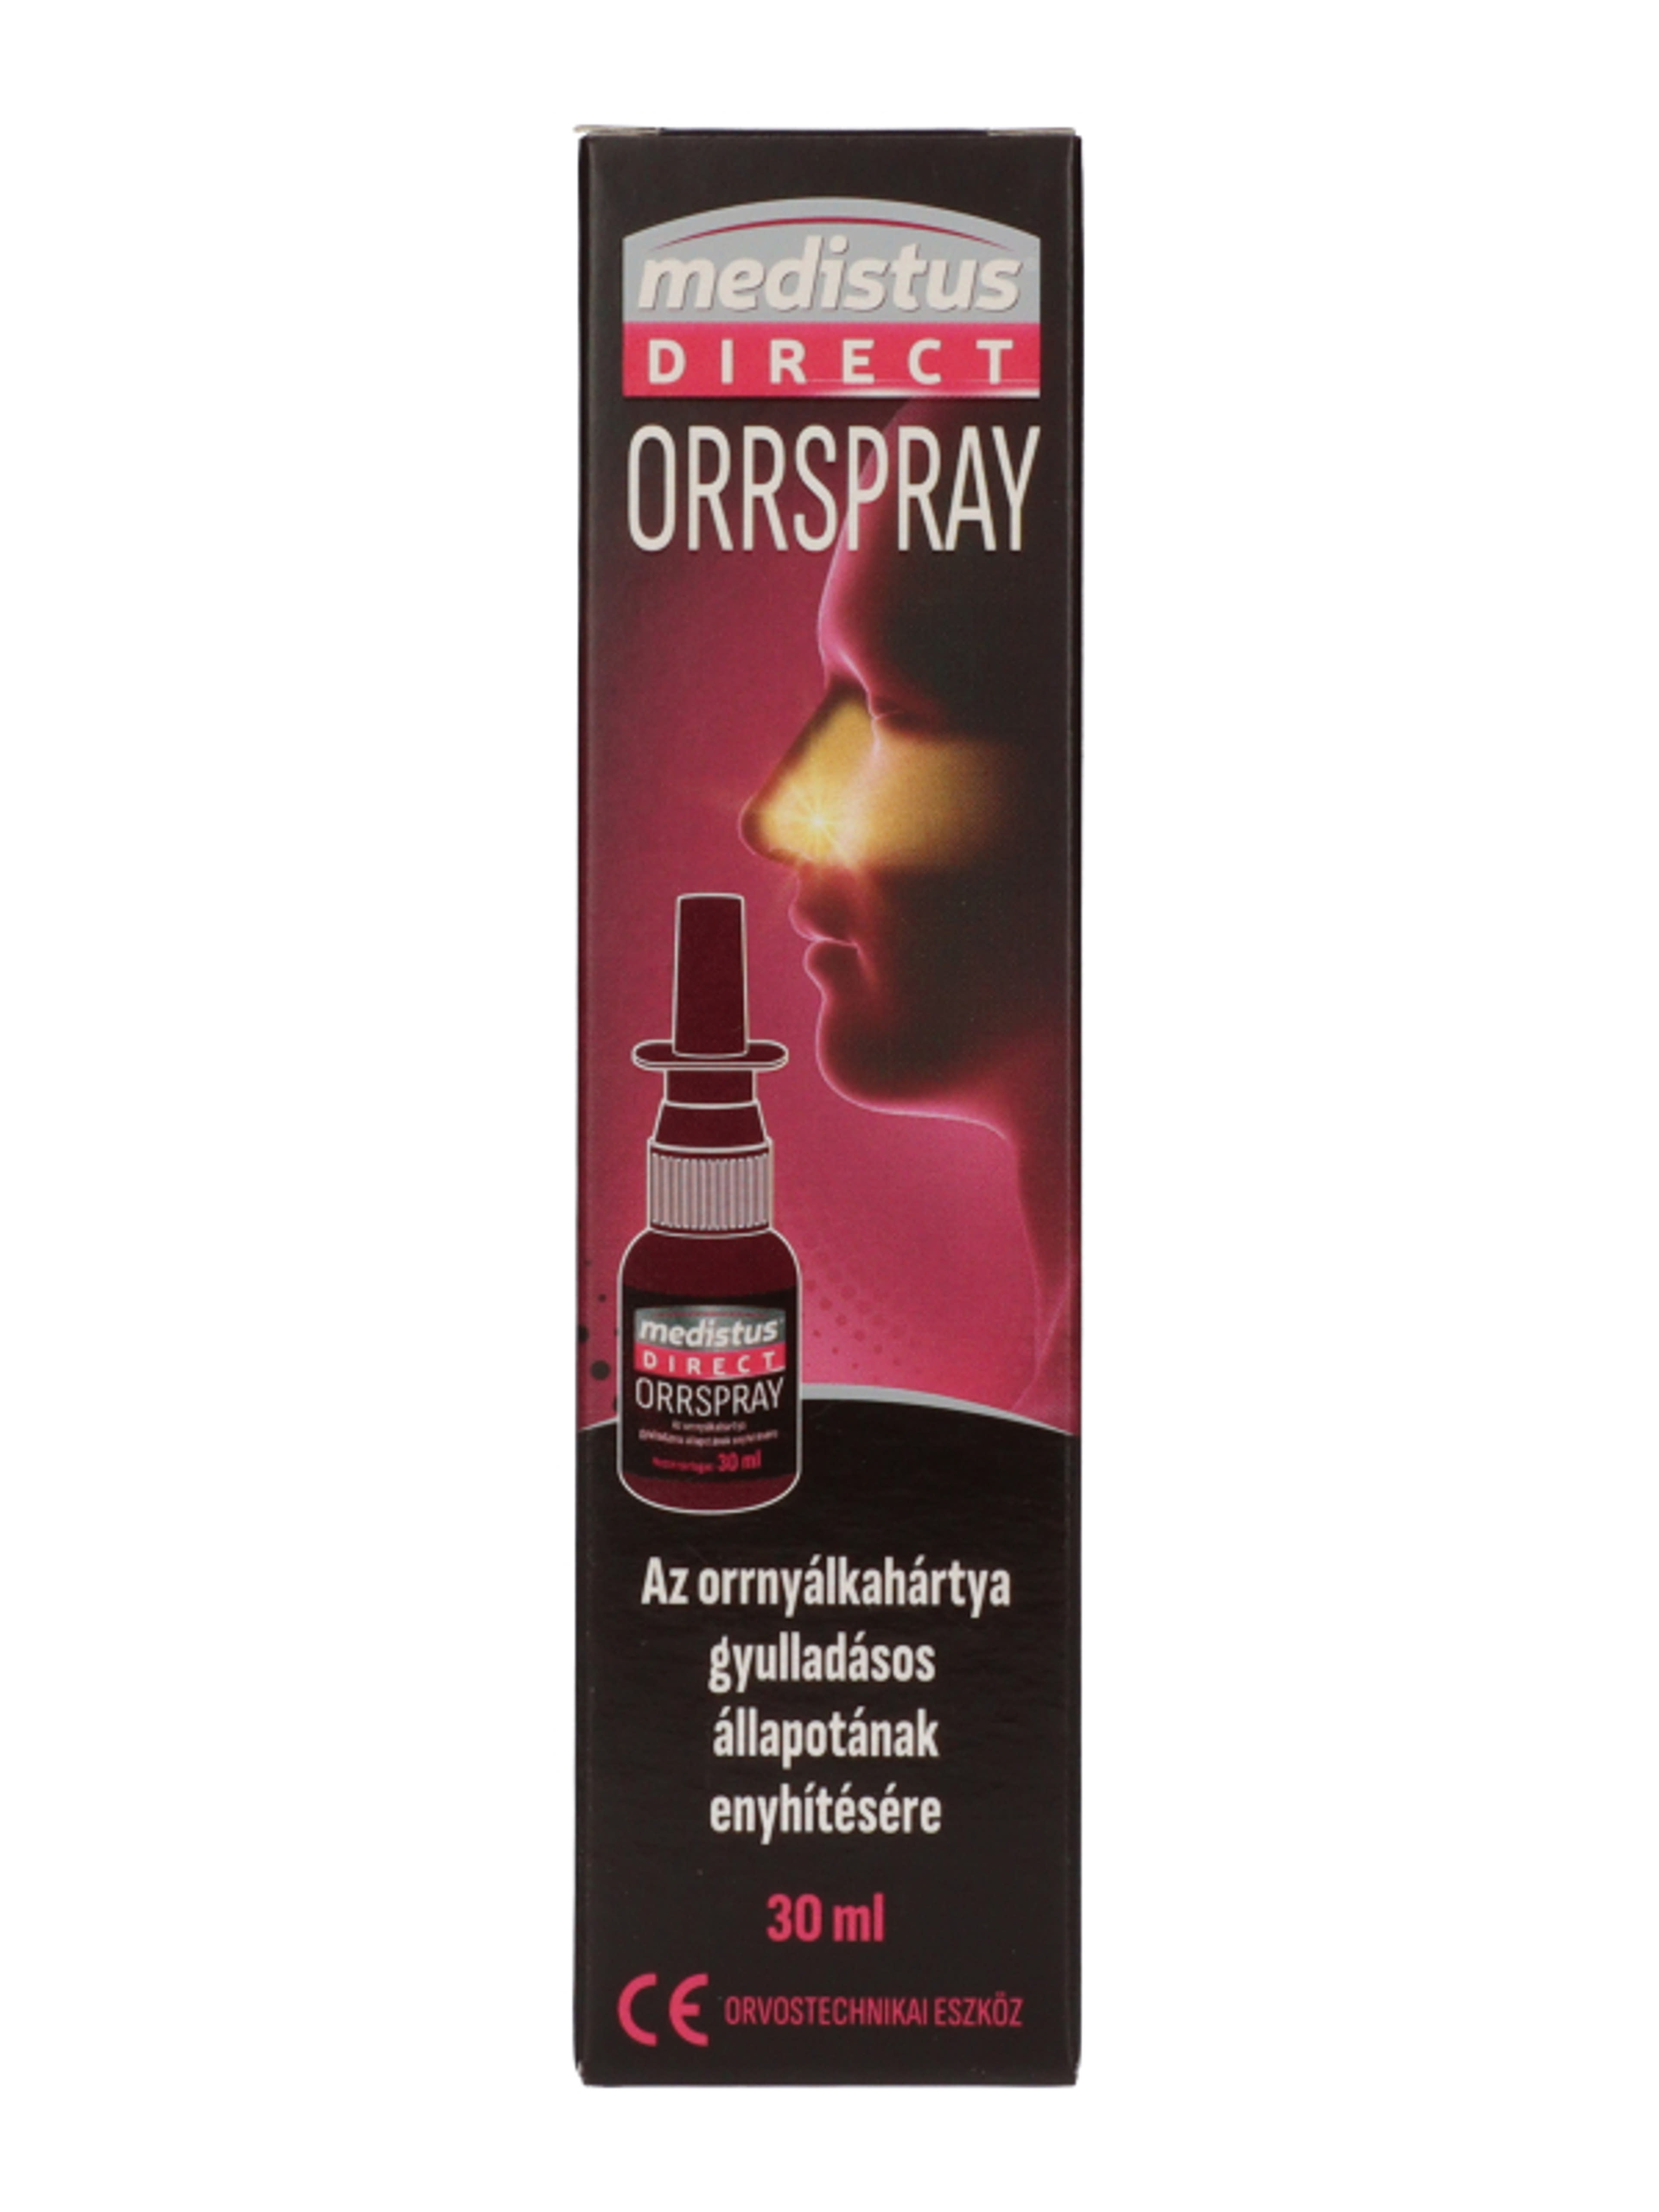 Medistus Direct orrspray - 30 ml-3